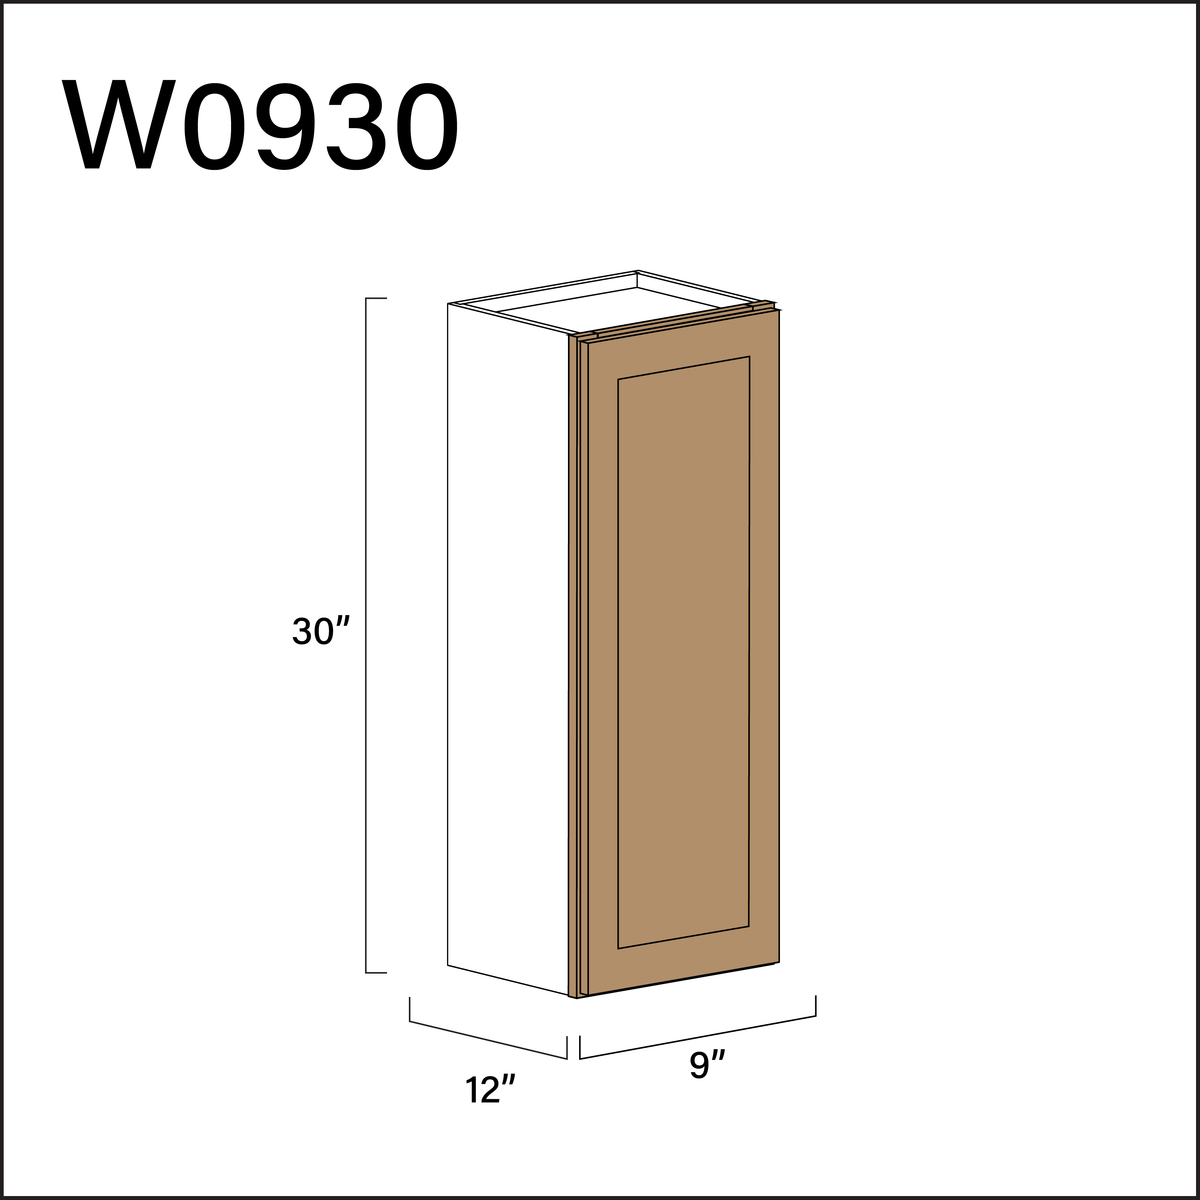 Alton Iced Mocha Single Door Wall Cabinet - 9" W x 30" H x 12" D